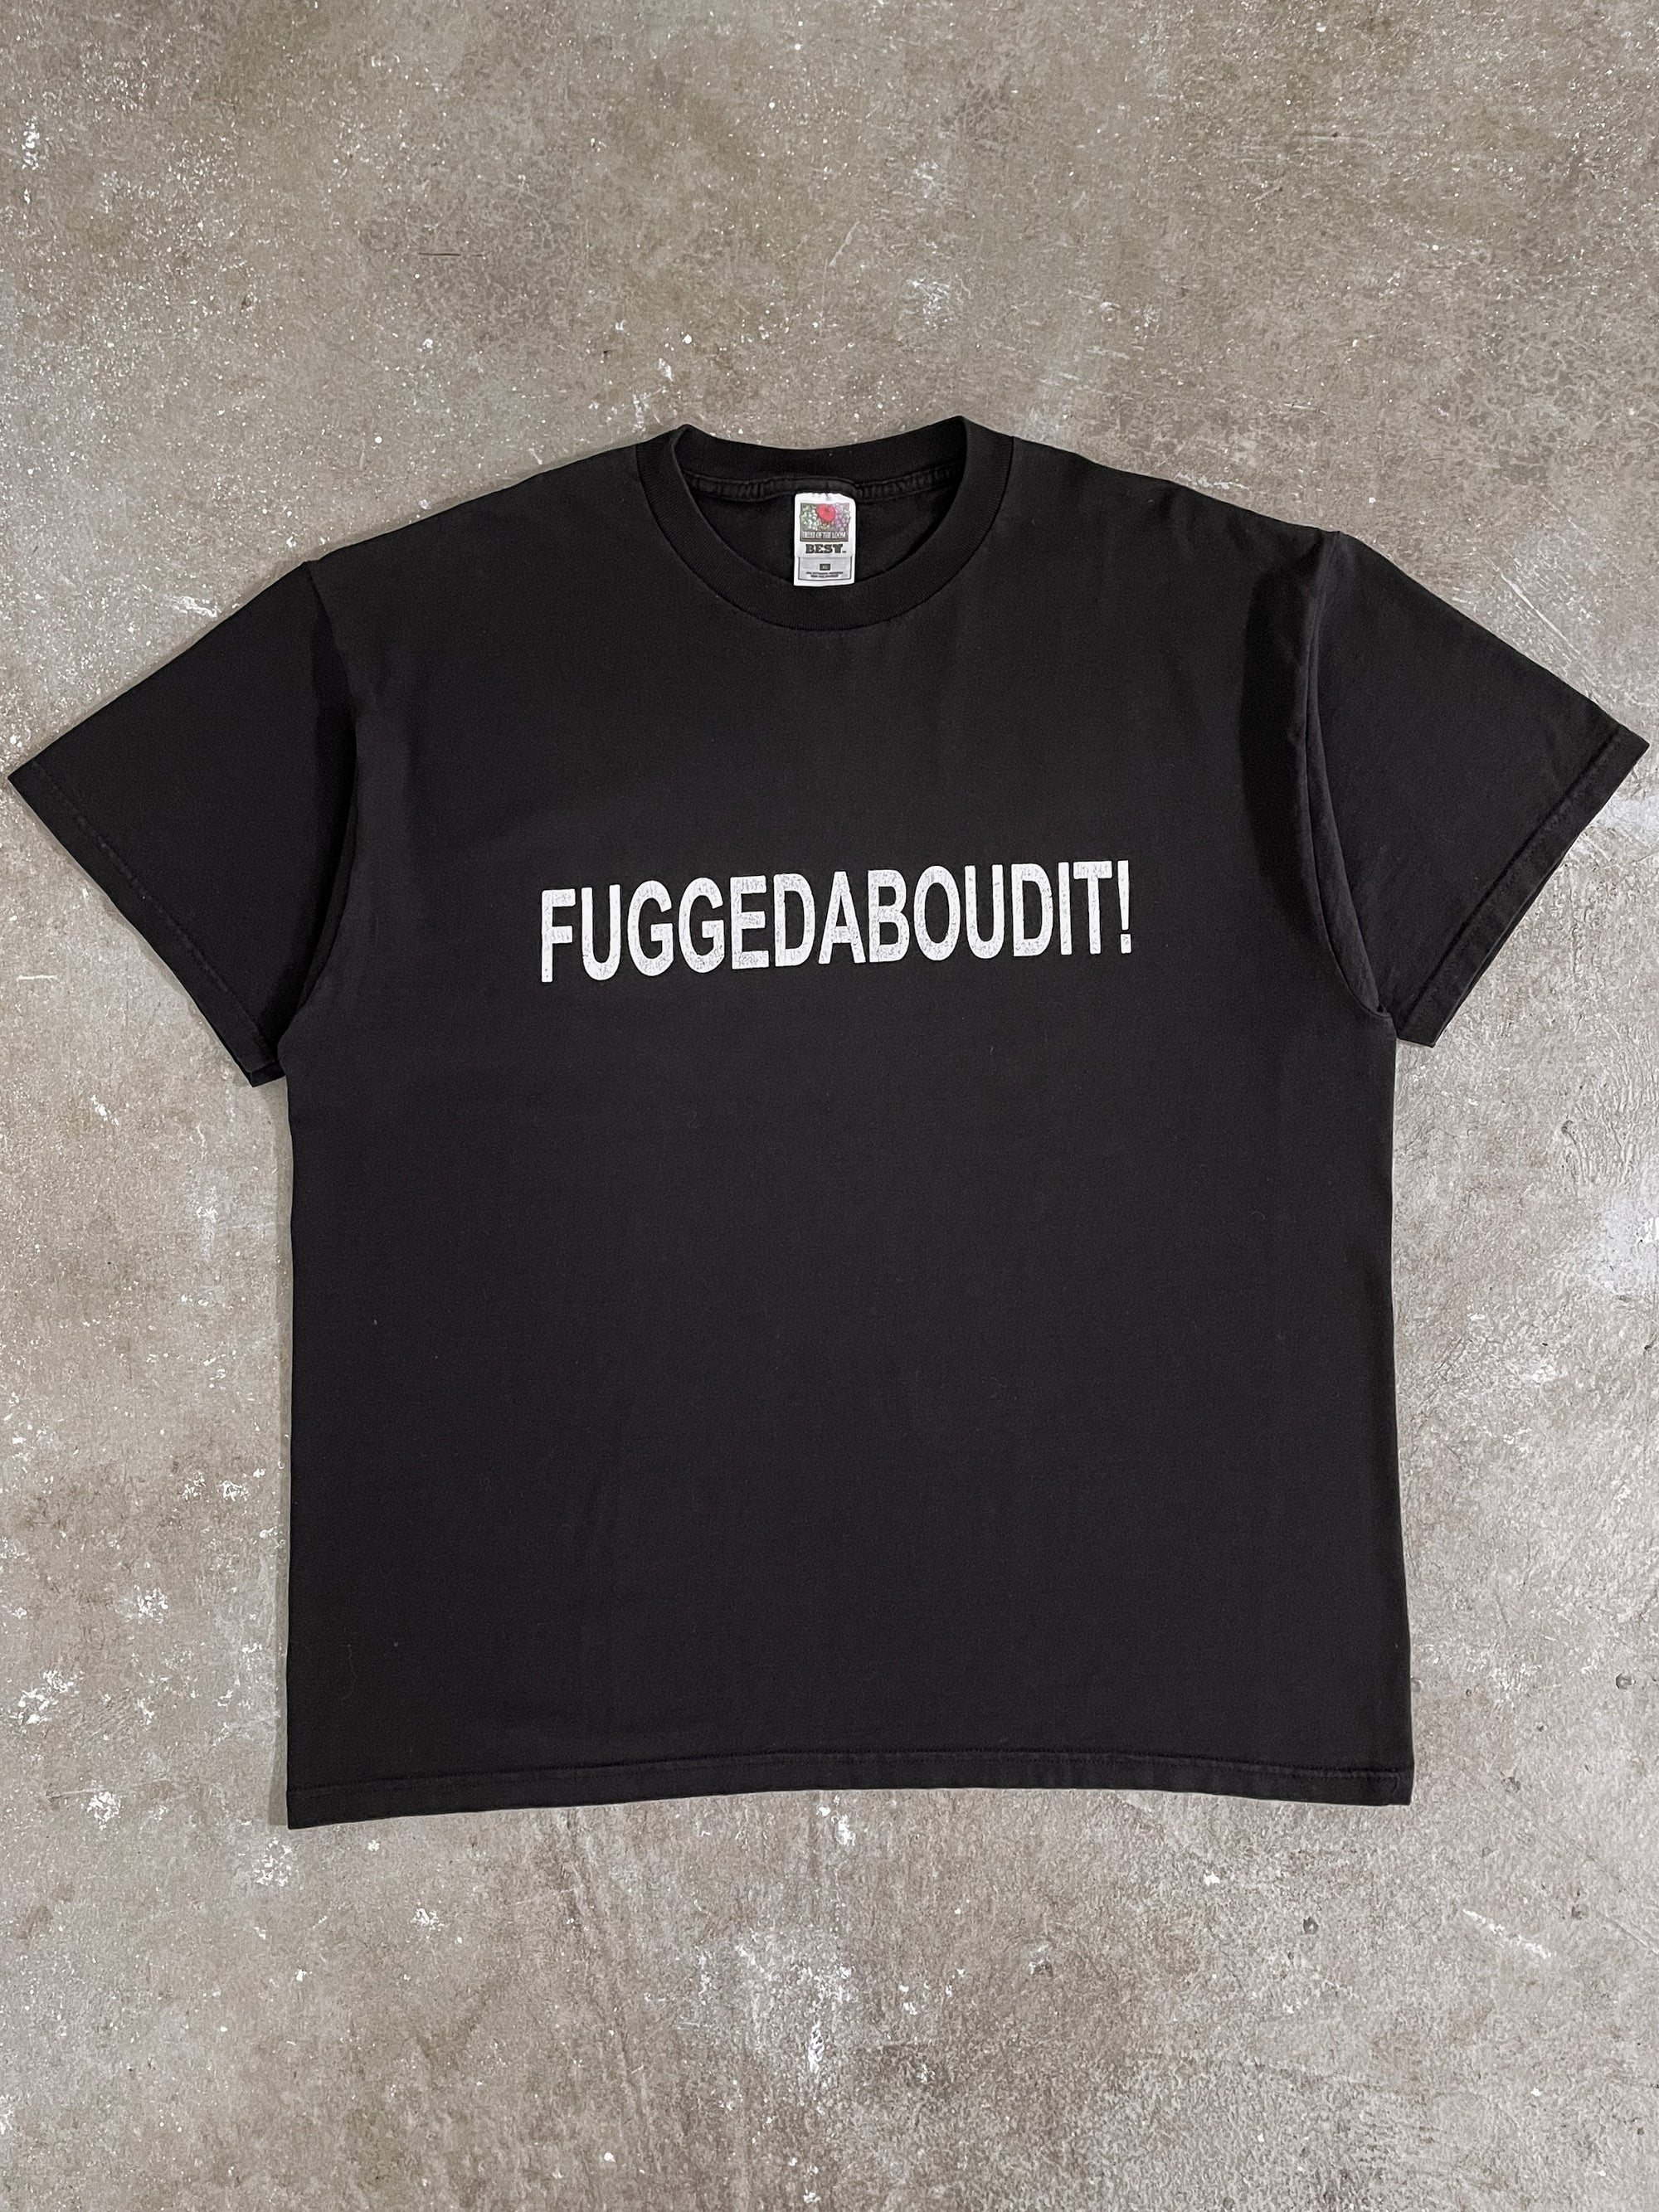 1990s “Fuggedaboudit!” Tee (XL)